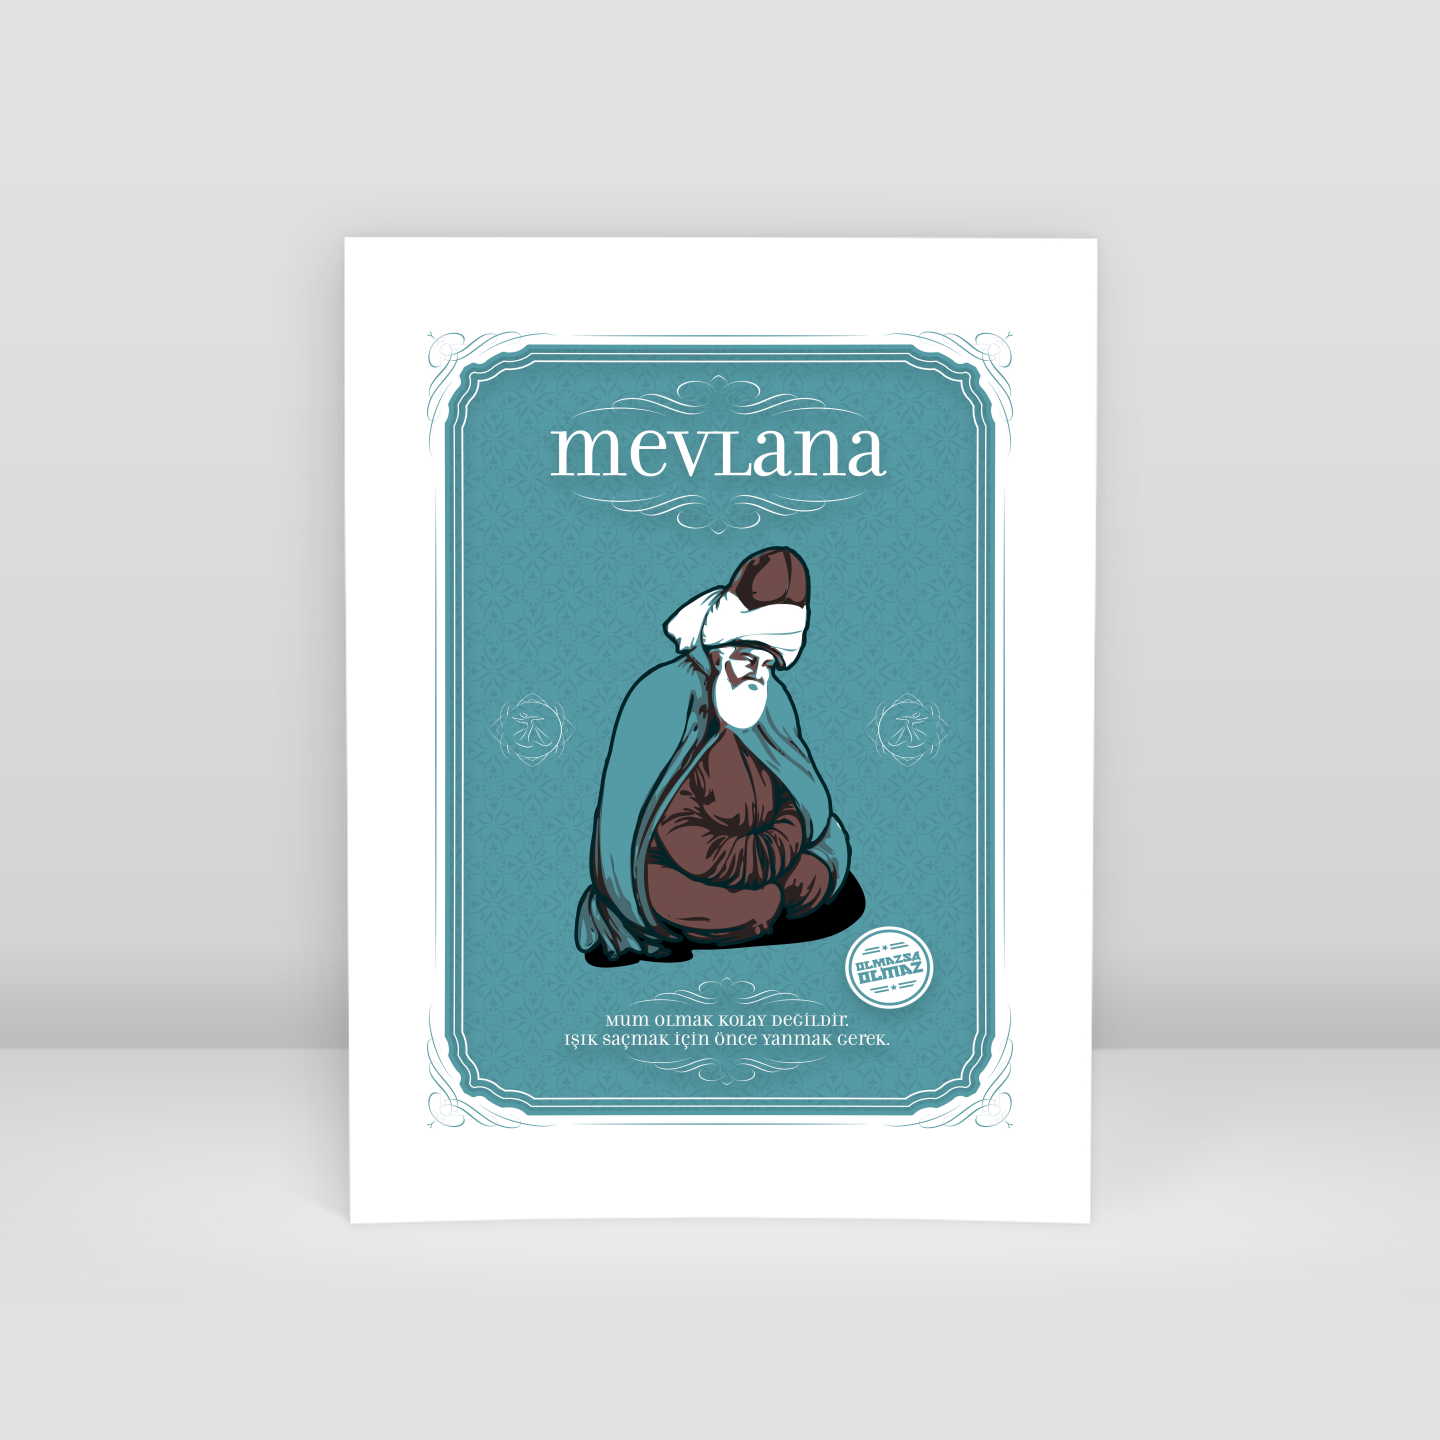 mevlana - Art Print